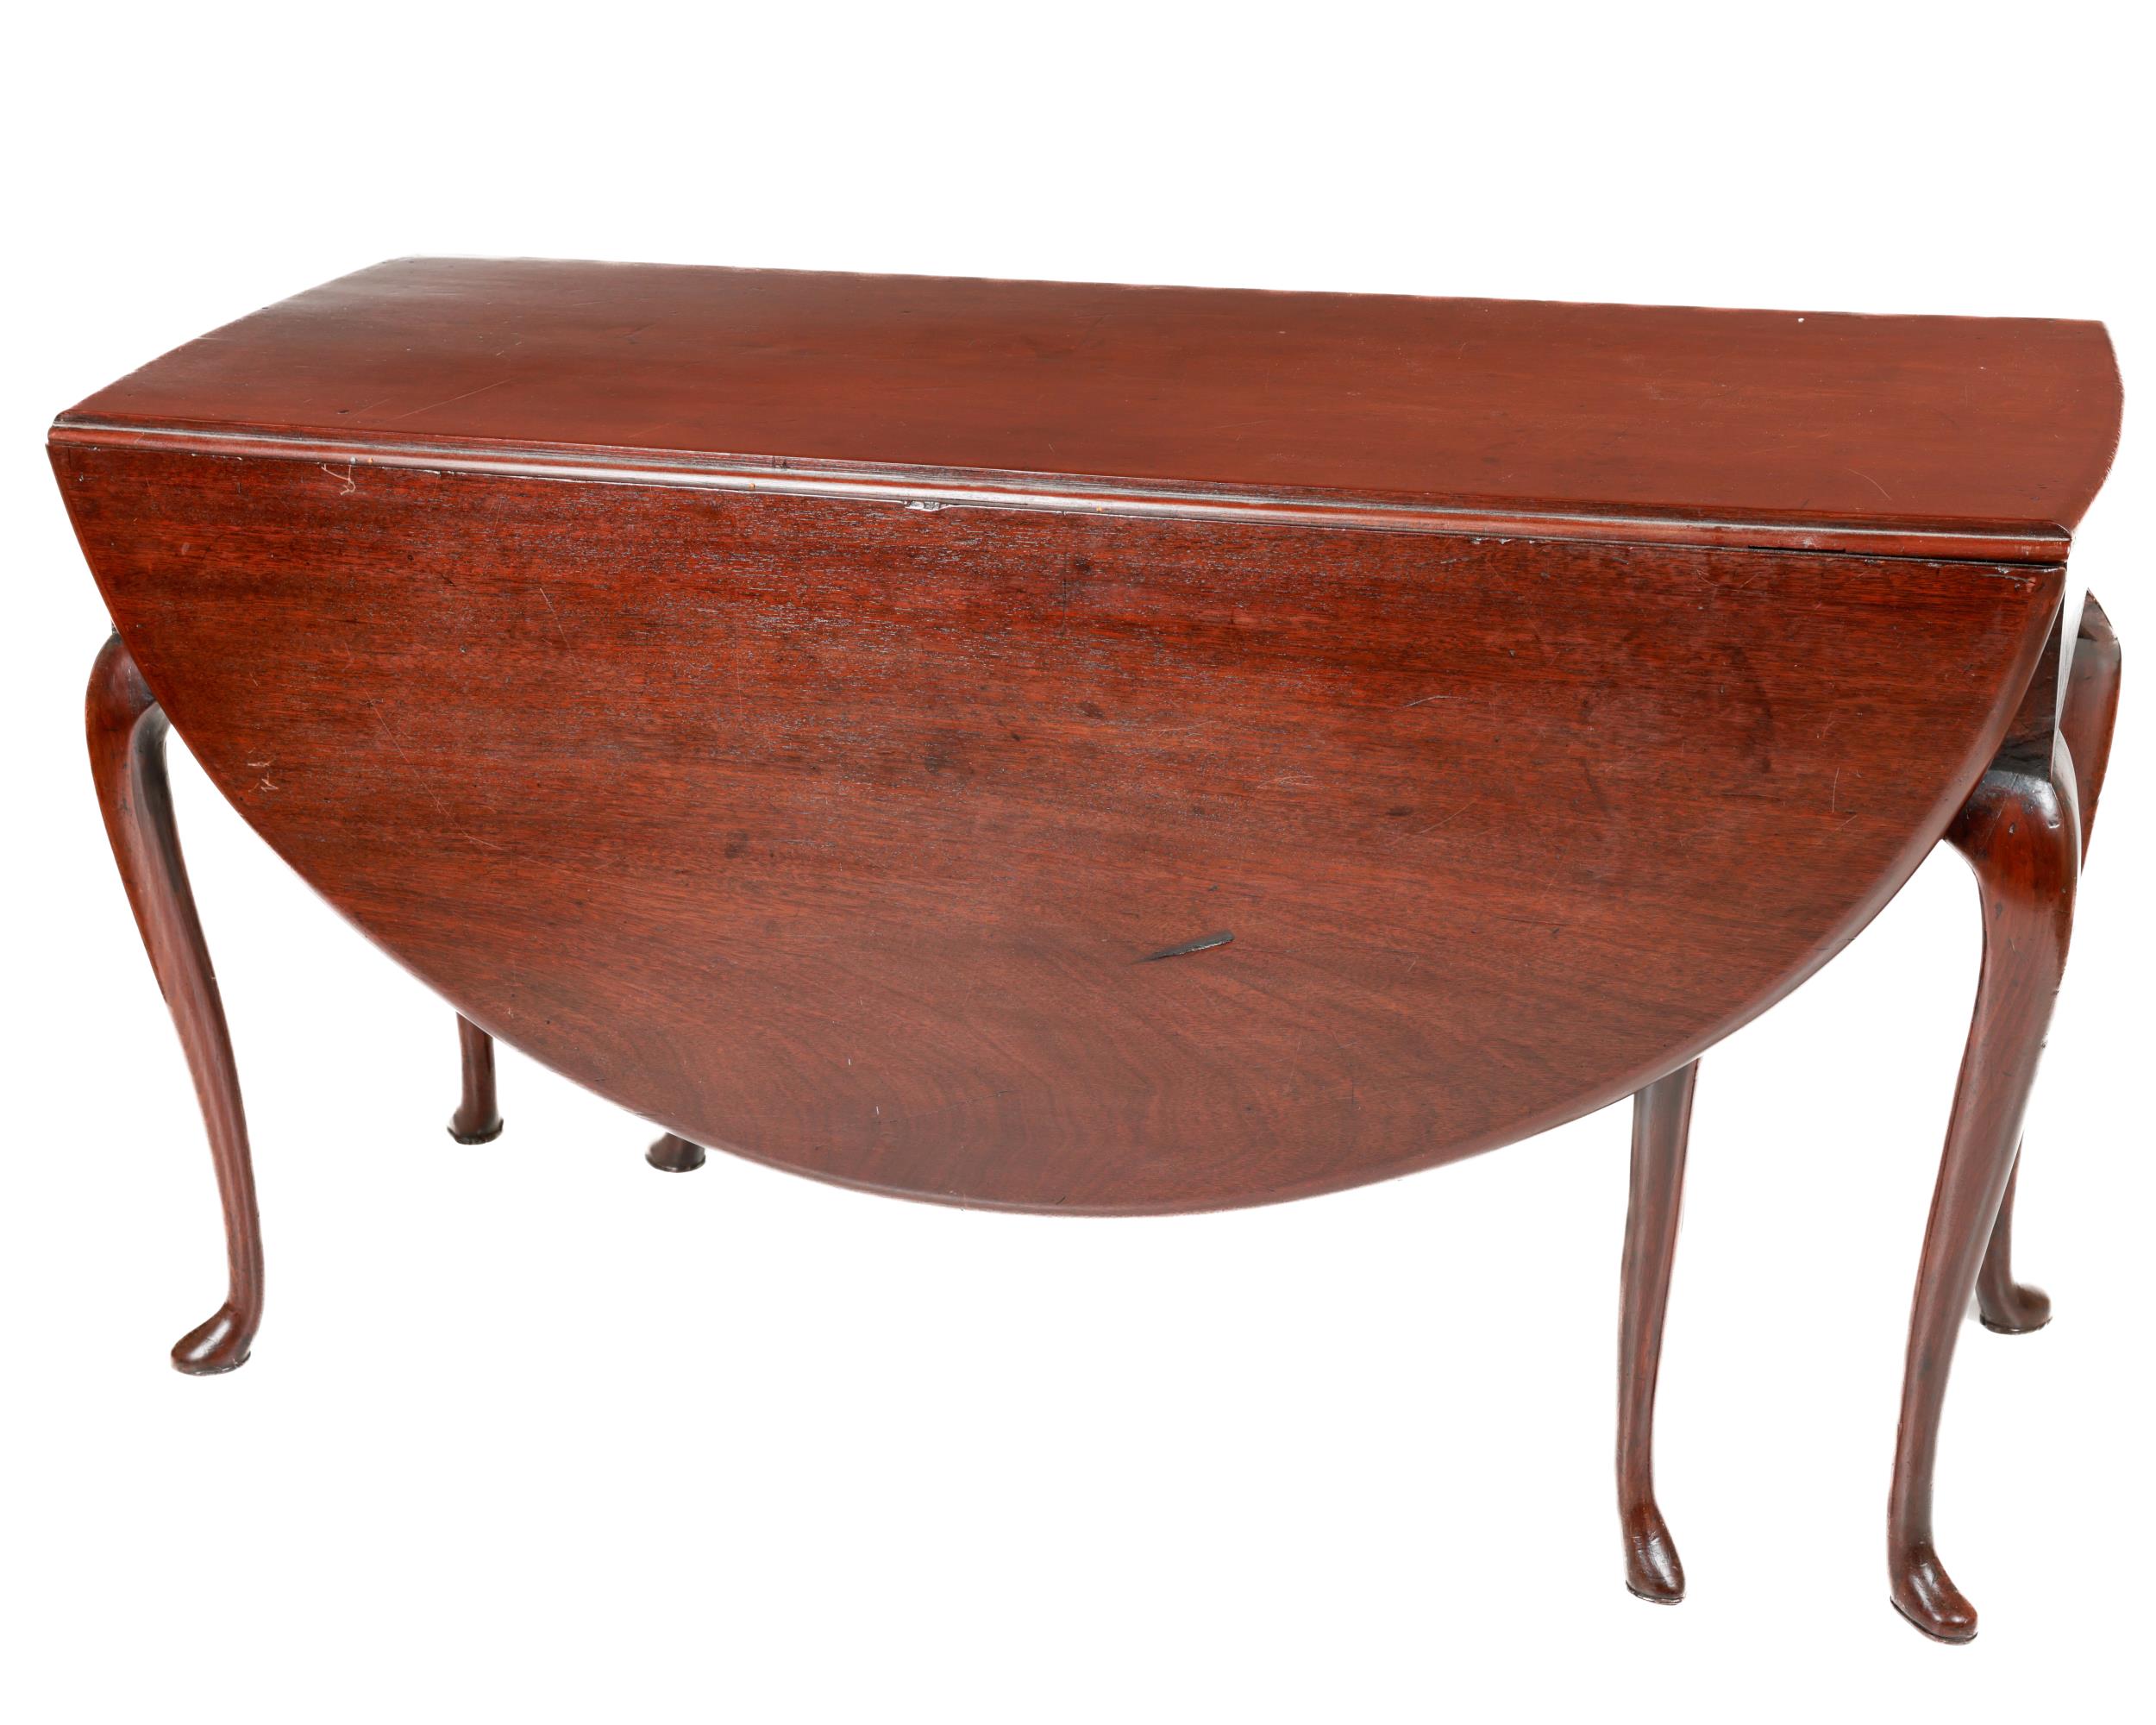 A fine quality and heavy Irish Georgian mahogany drop-leaf Table, with gate leg design, the demi-